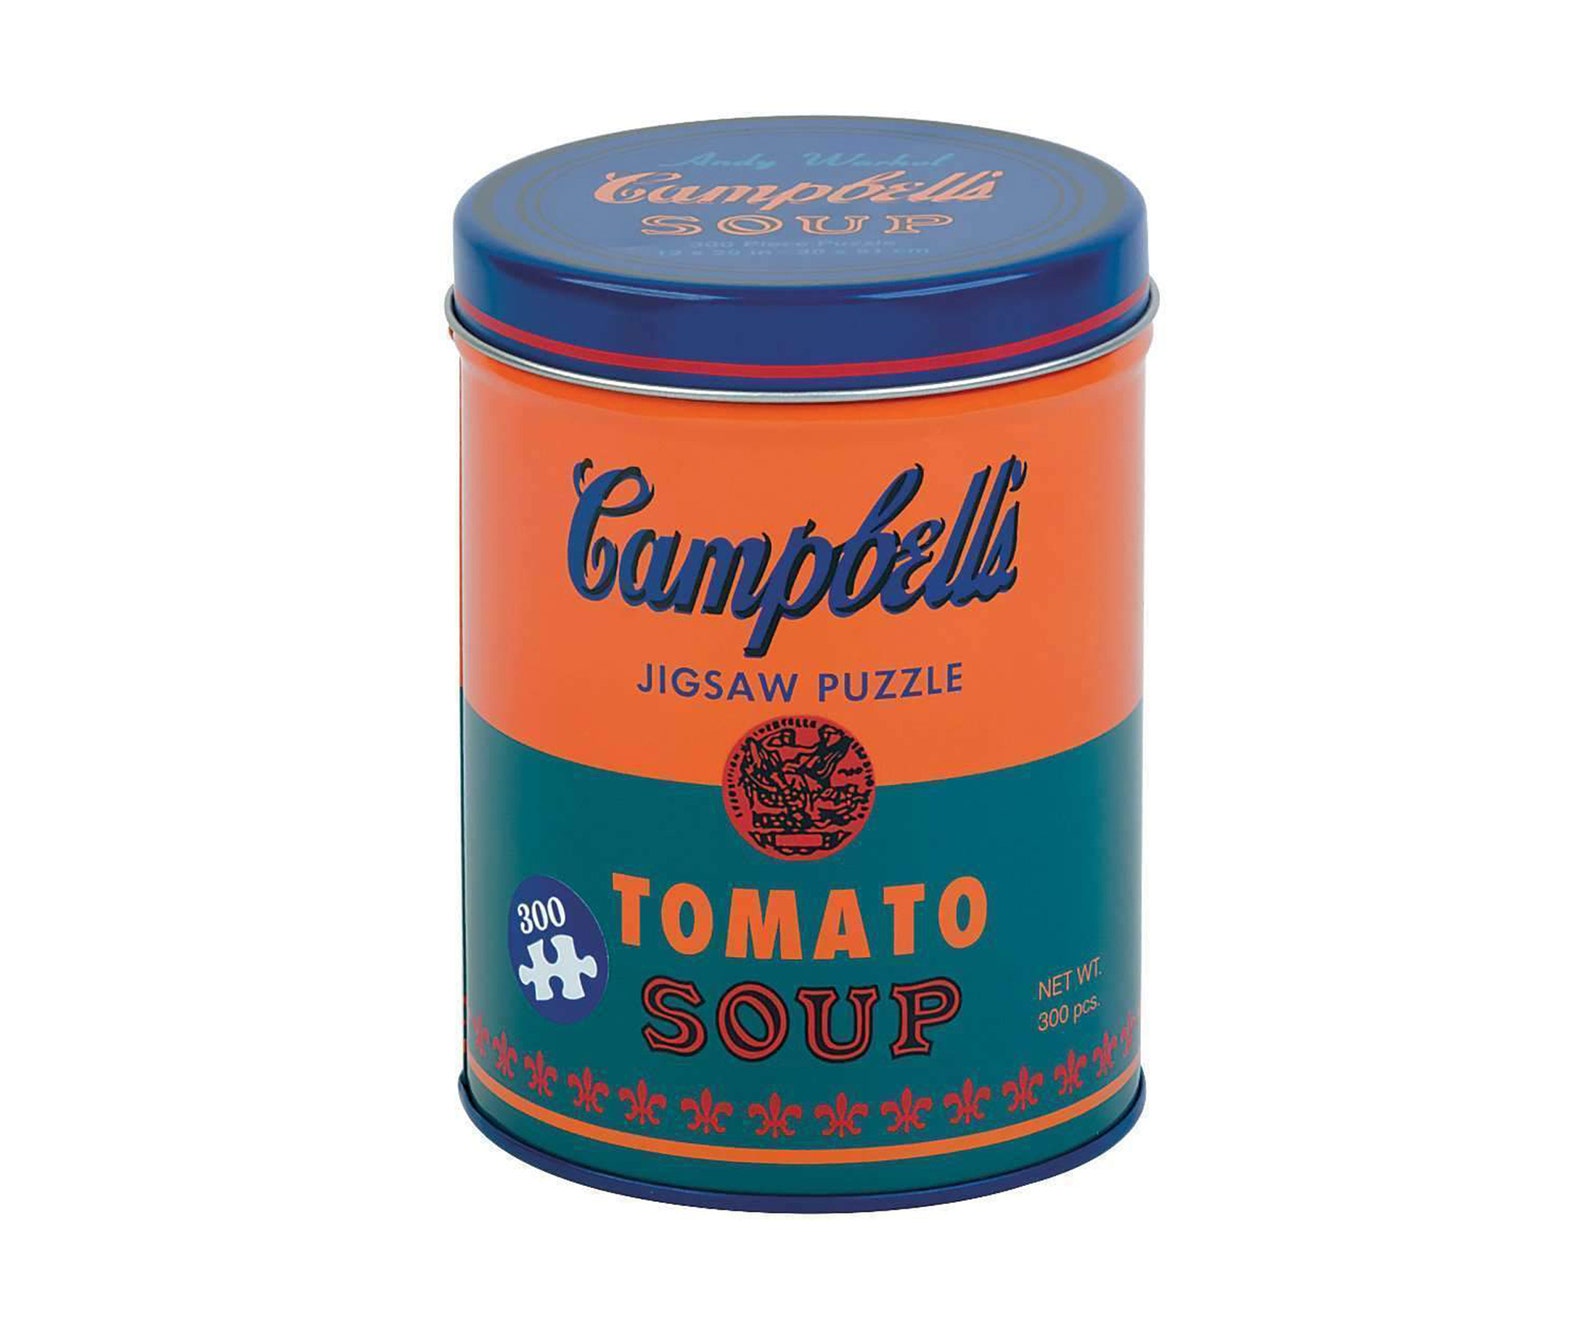 Soup cans. Уорхол суп. Энди Уорхол суп. Банка супа Кэмпбелл. Can of Soup.